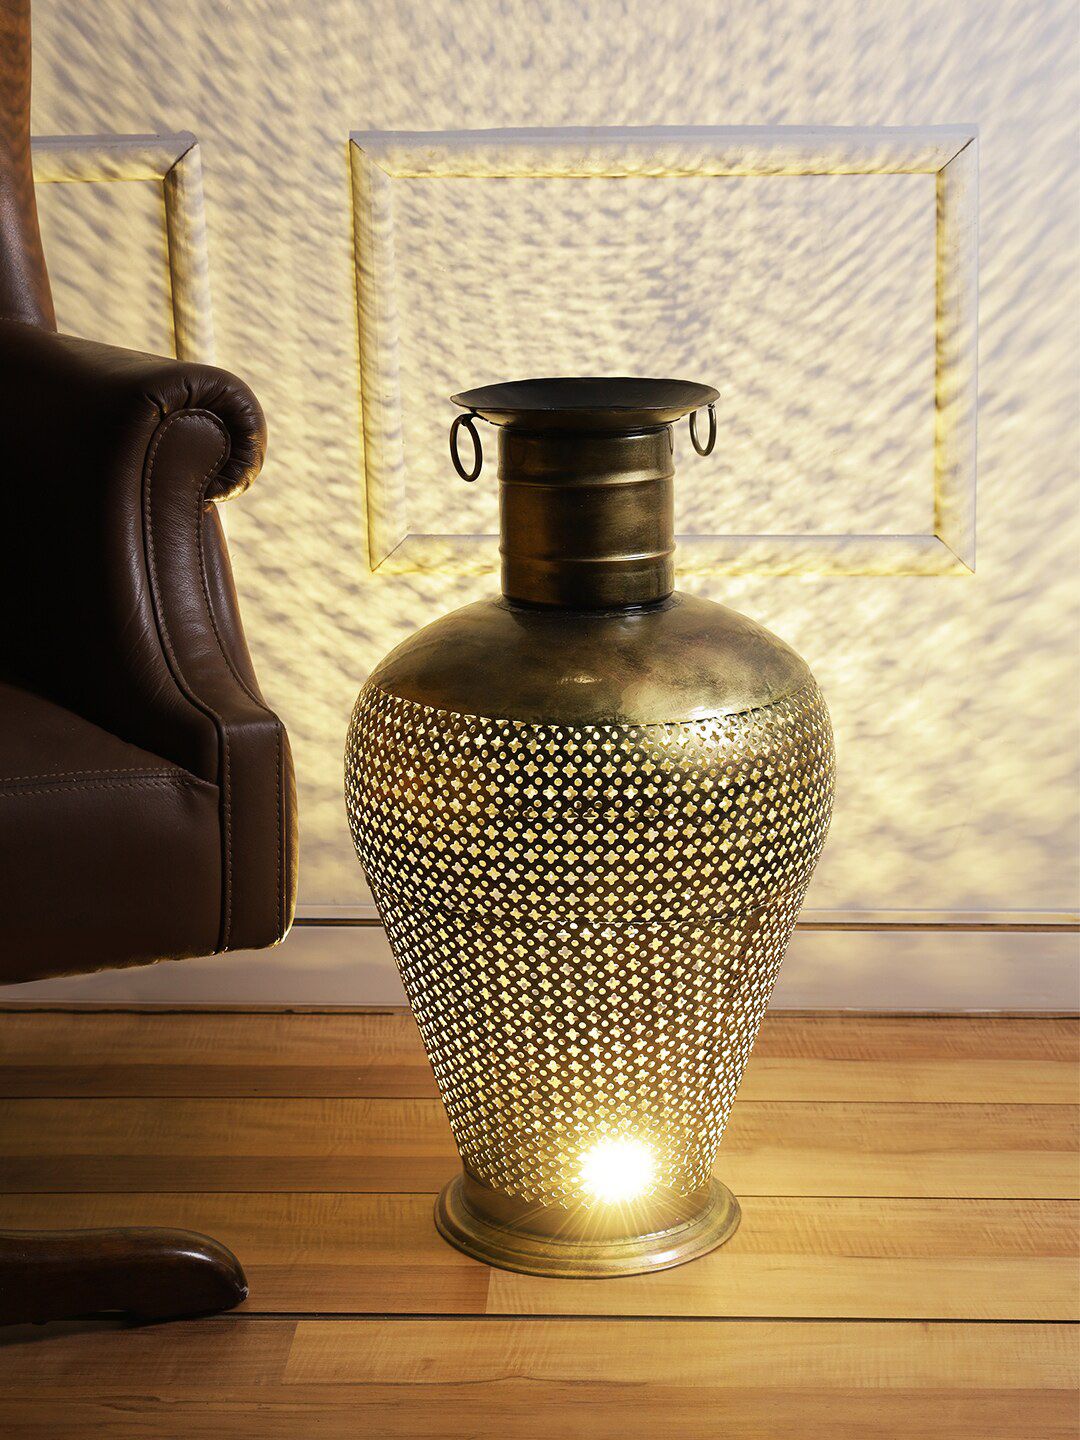 Aapno Rajasthan Gold-Toned Metal Floor Lamp Price in India